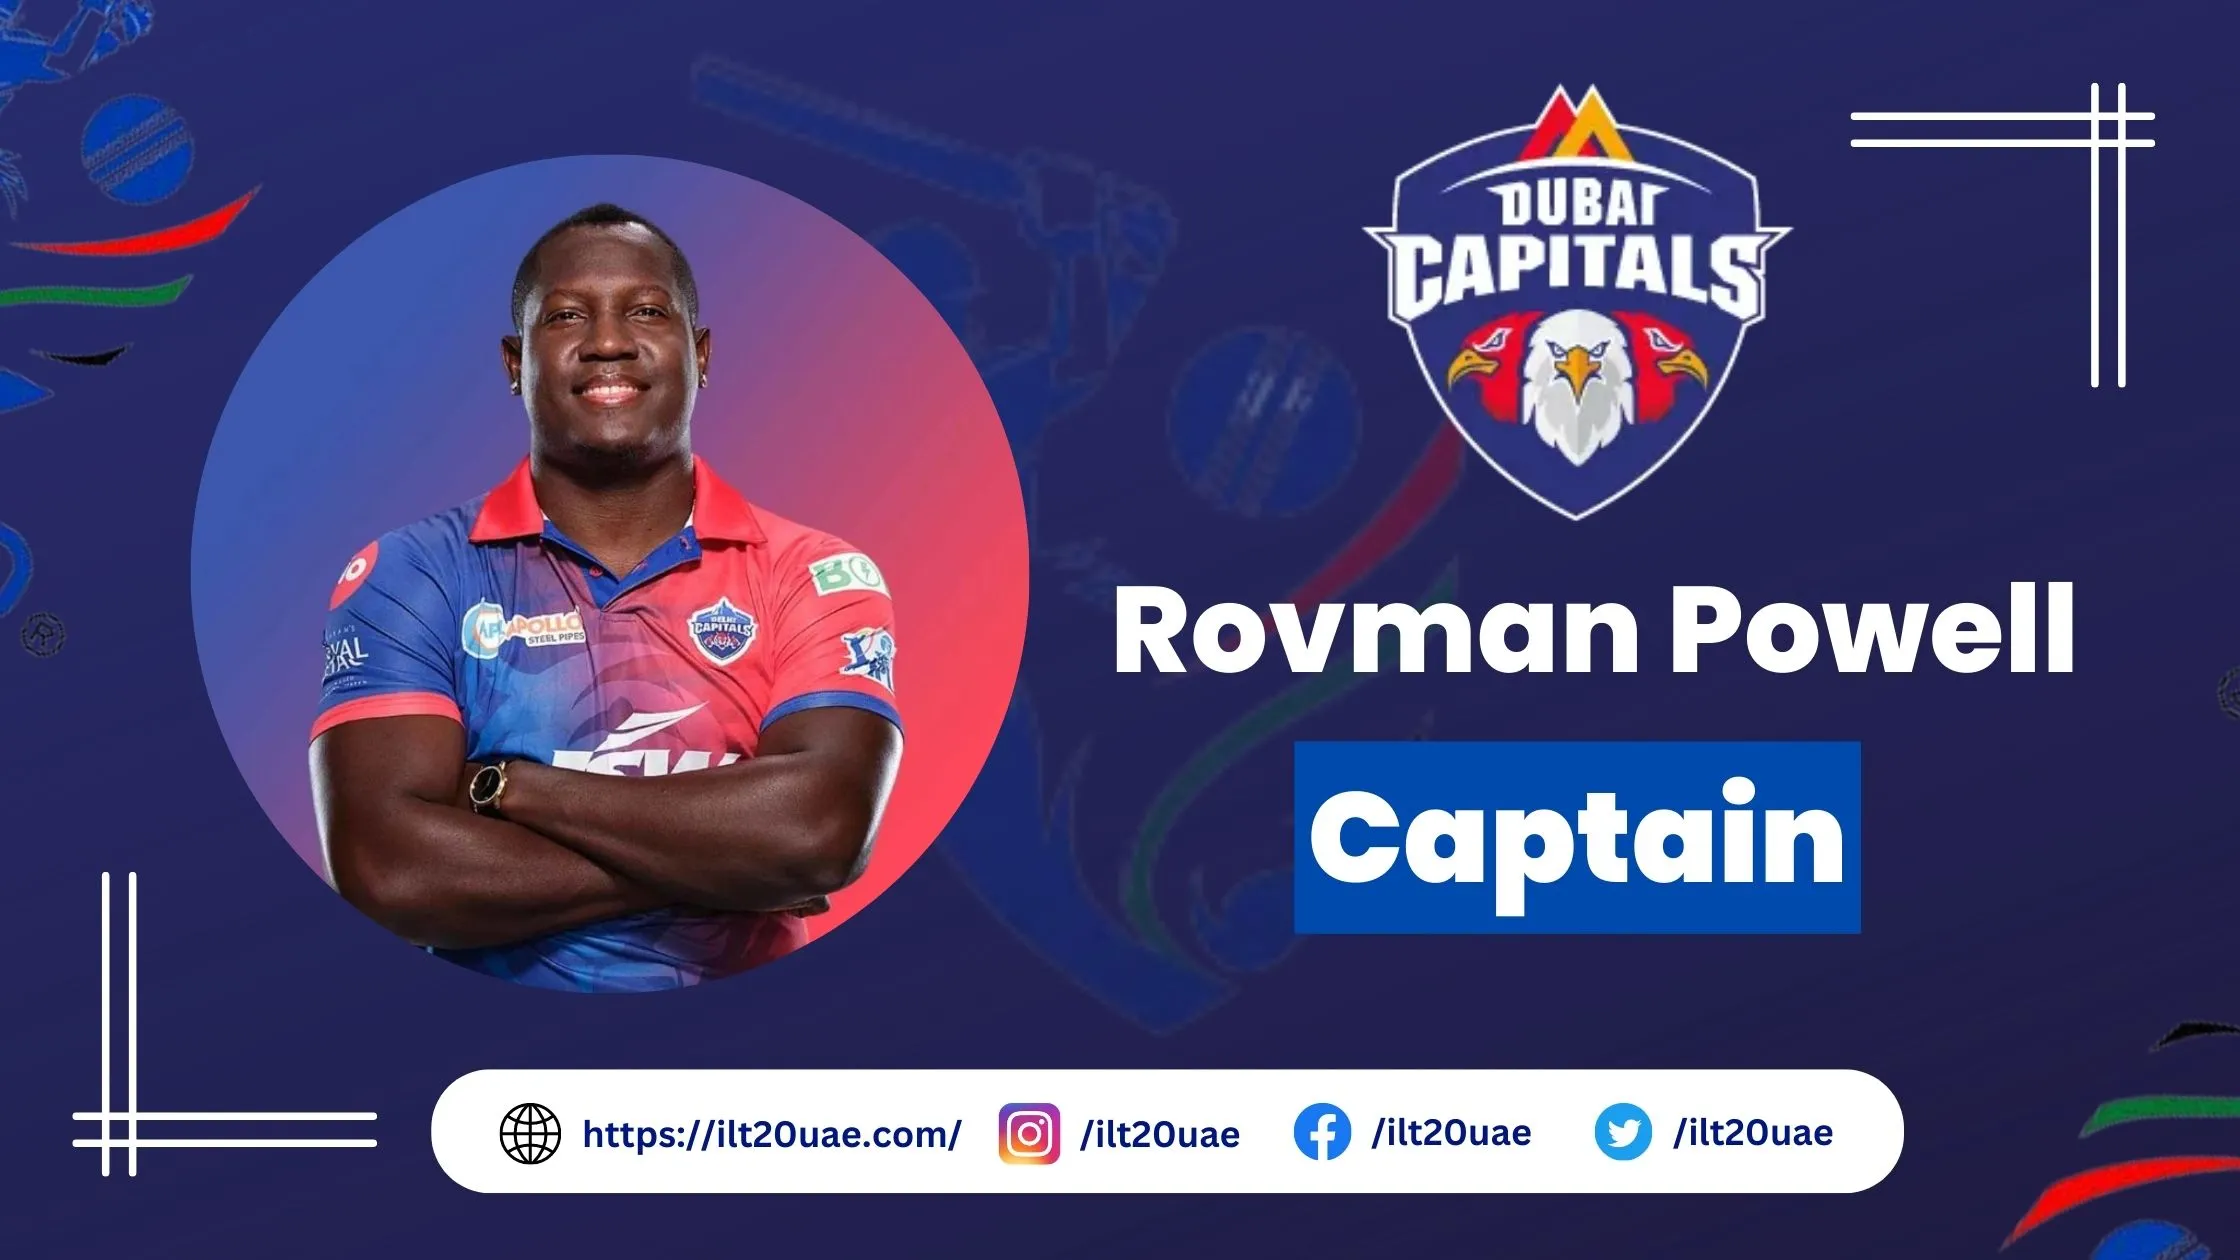 rovman-powell-captain-of-dubai-capitals